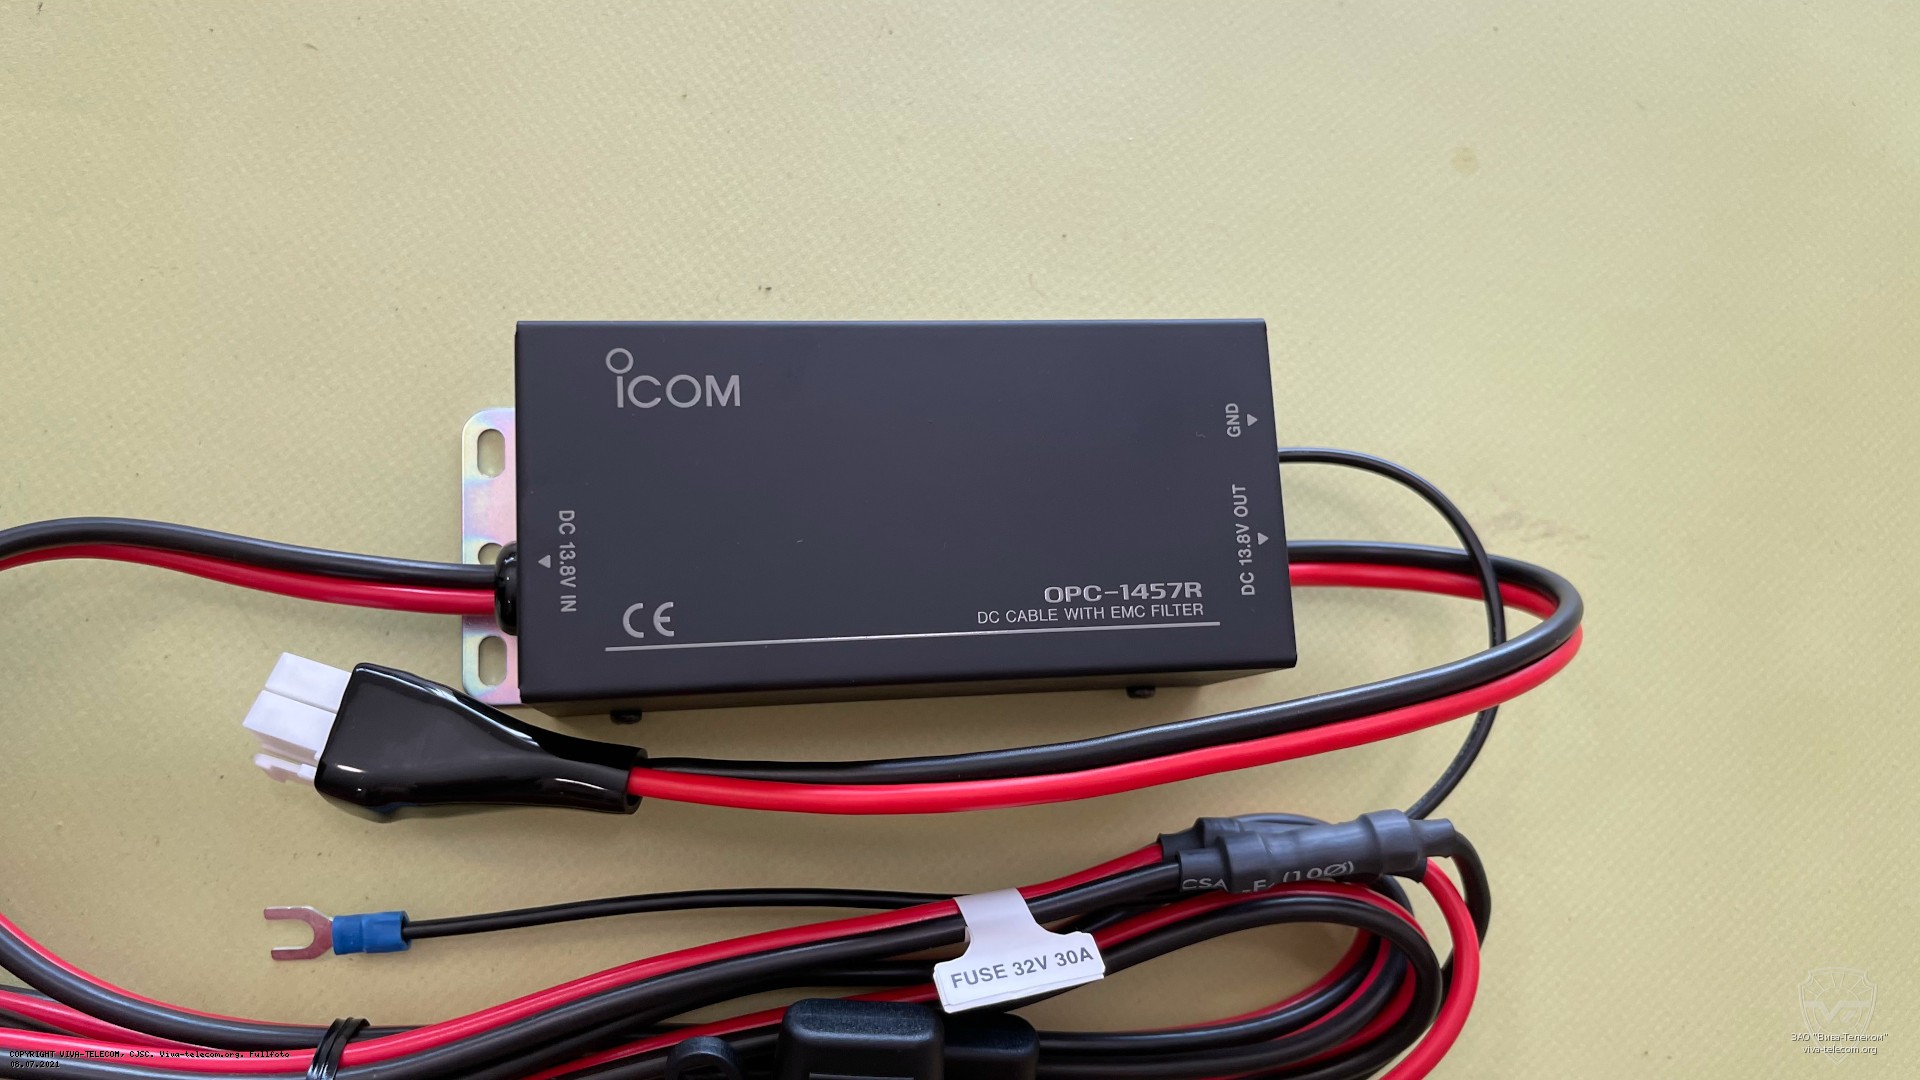    Icom IC-7300